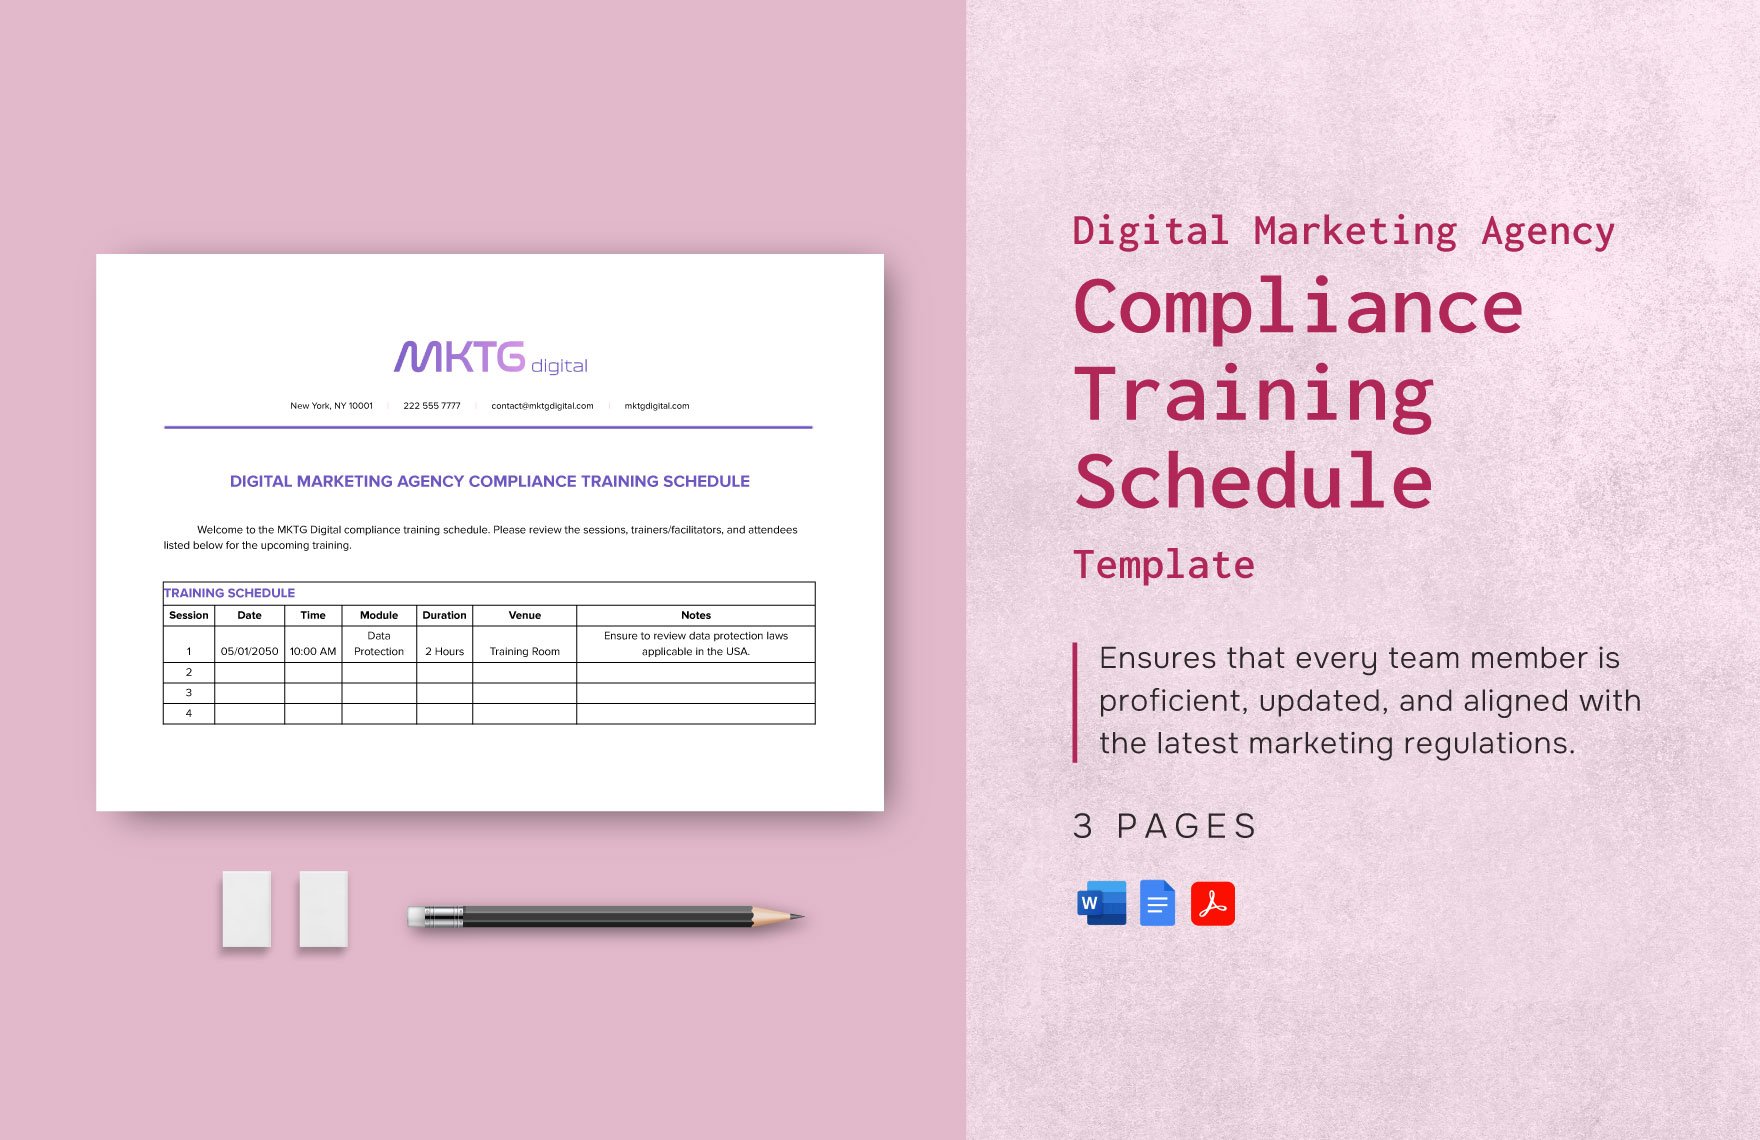 Digital Marketing Agency Compliance Training Schedule Template